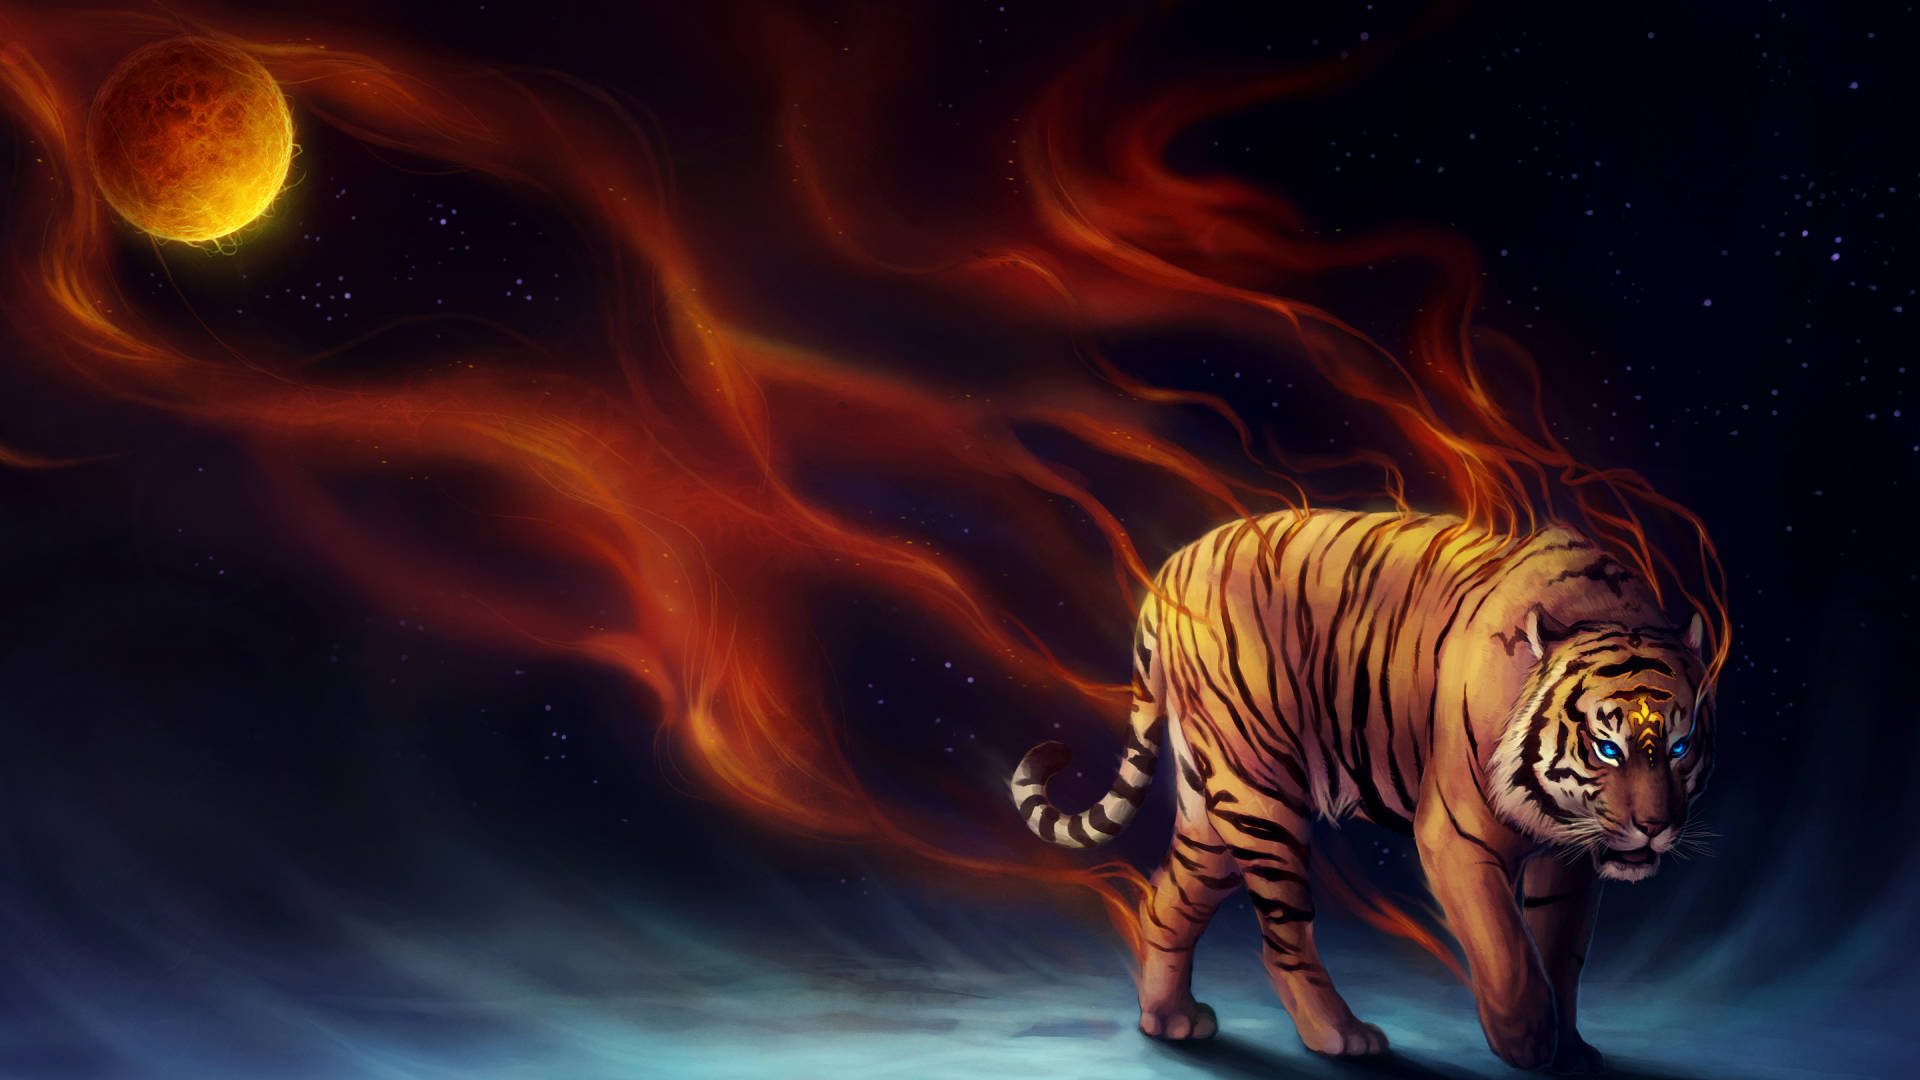 Cool Tiger Moon Digital Art Background